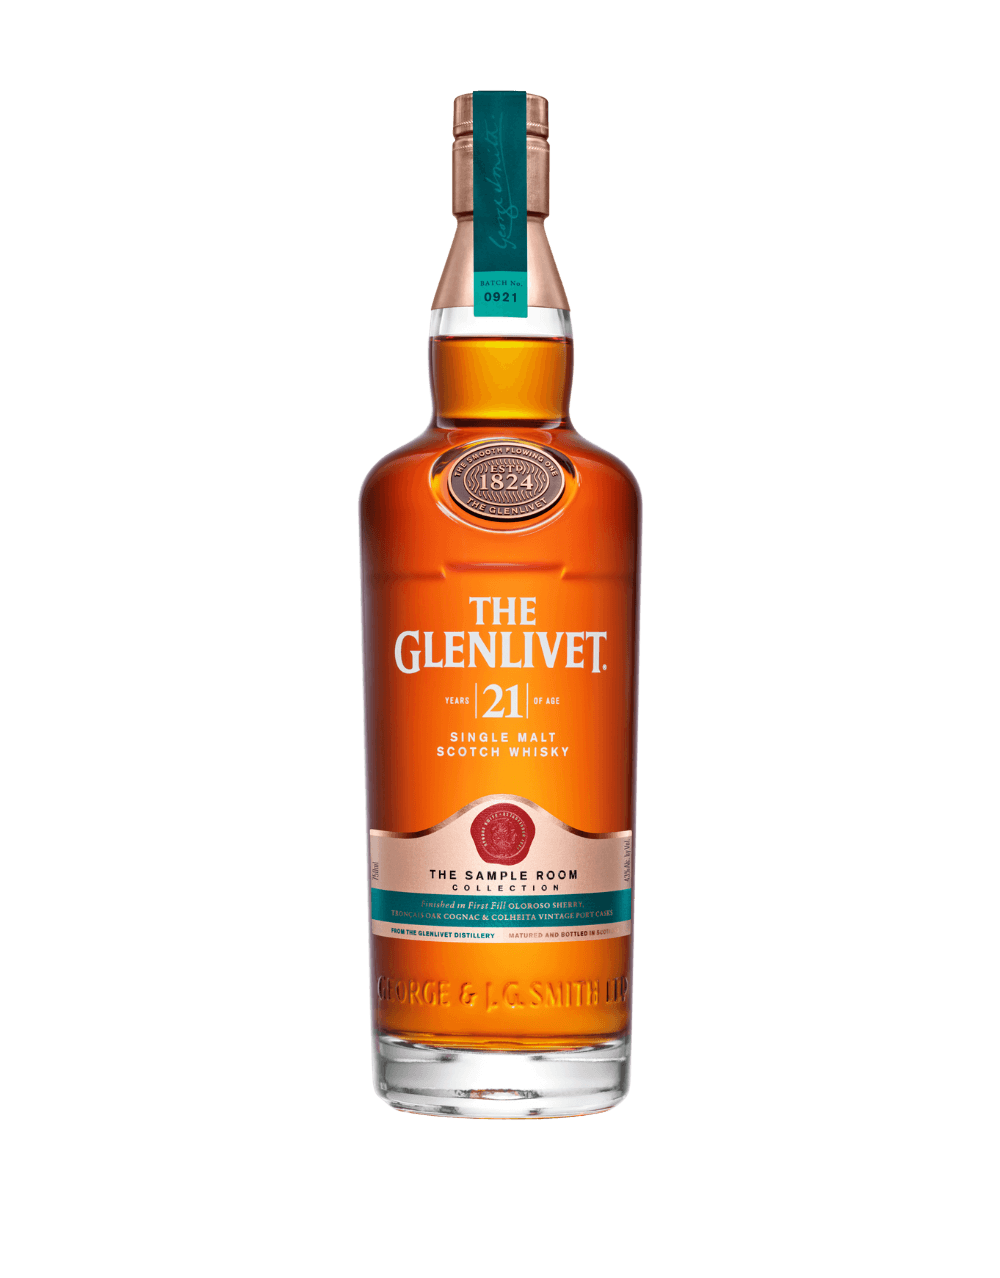 The Glenlivet 21 Year Old Single Malt Scotch Whisky